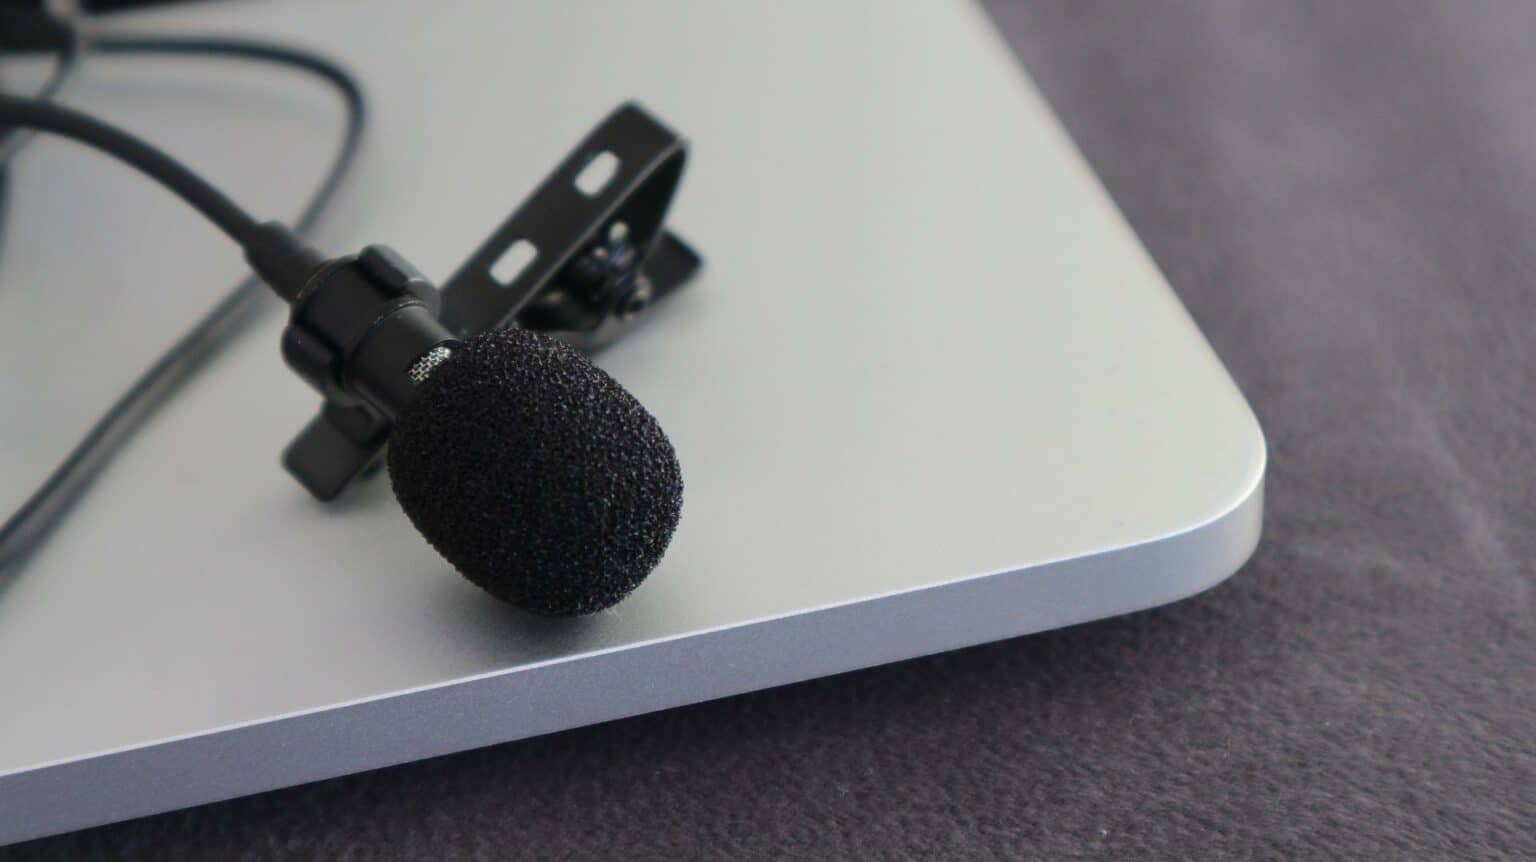 mac boost microphone volume